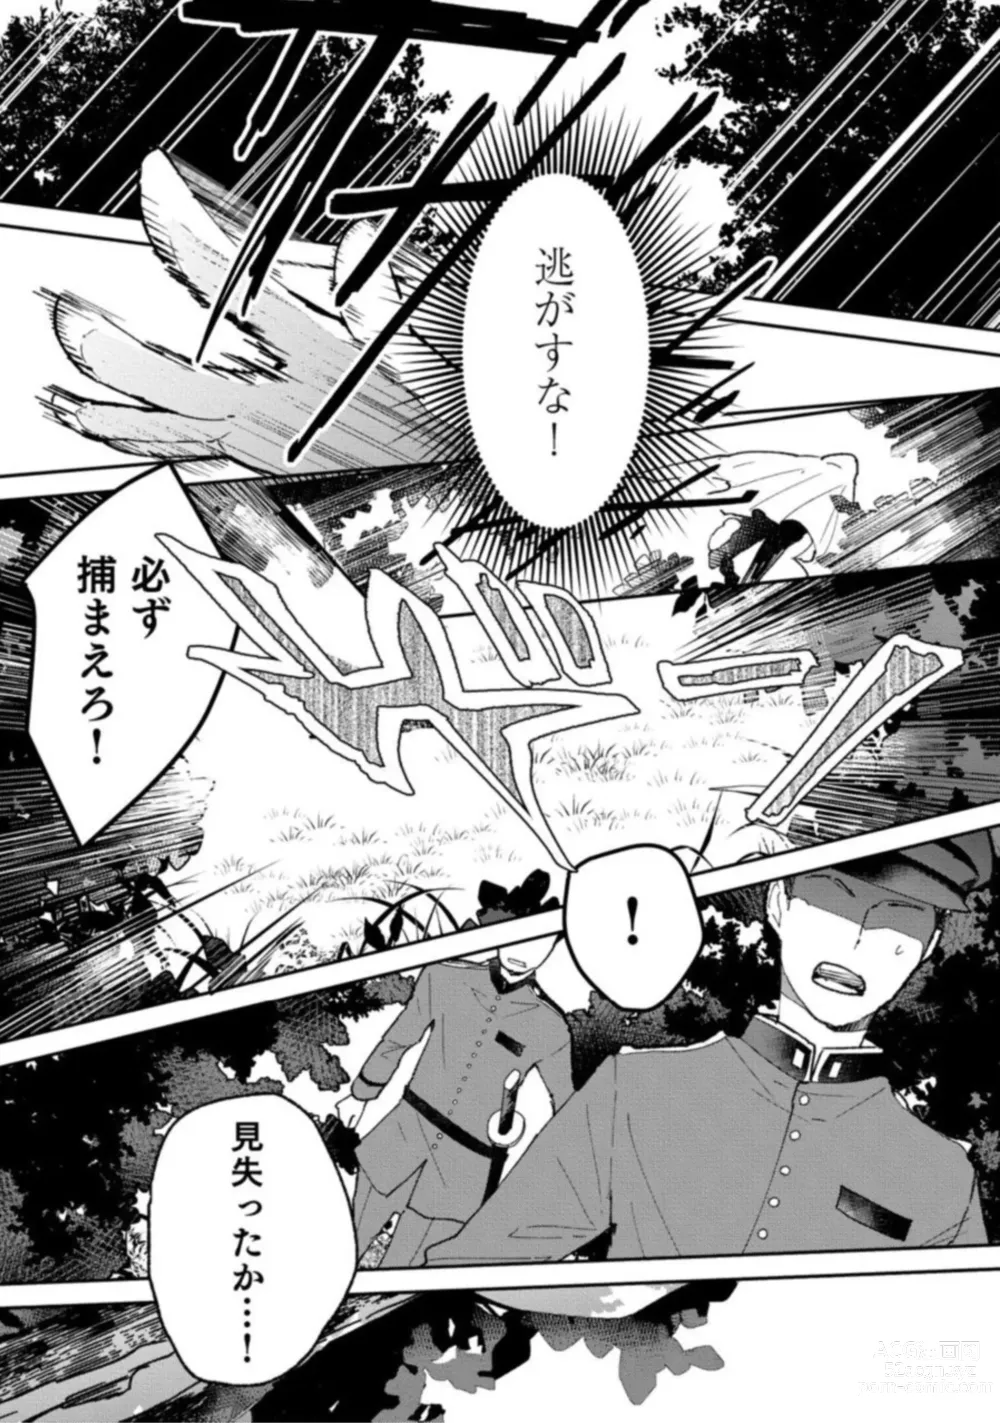 Page 3 of manga Kemonohito Kishi no Keiai STORY.1